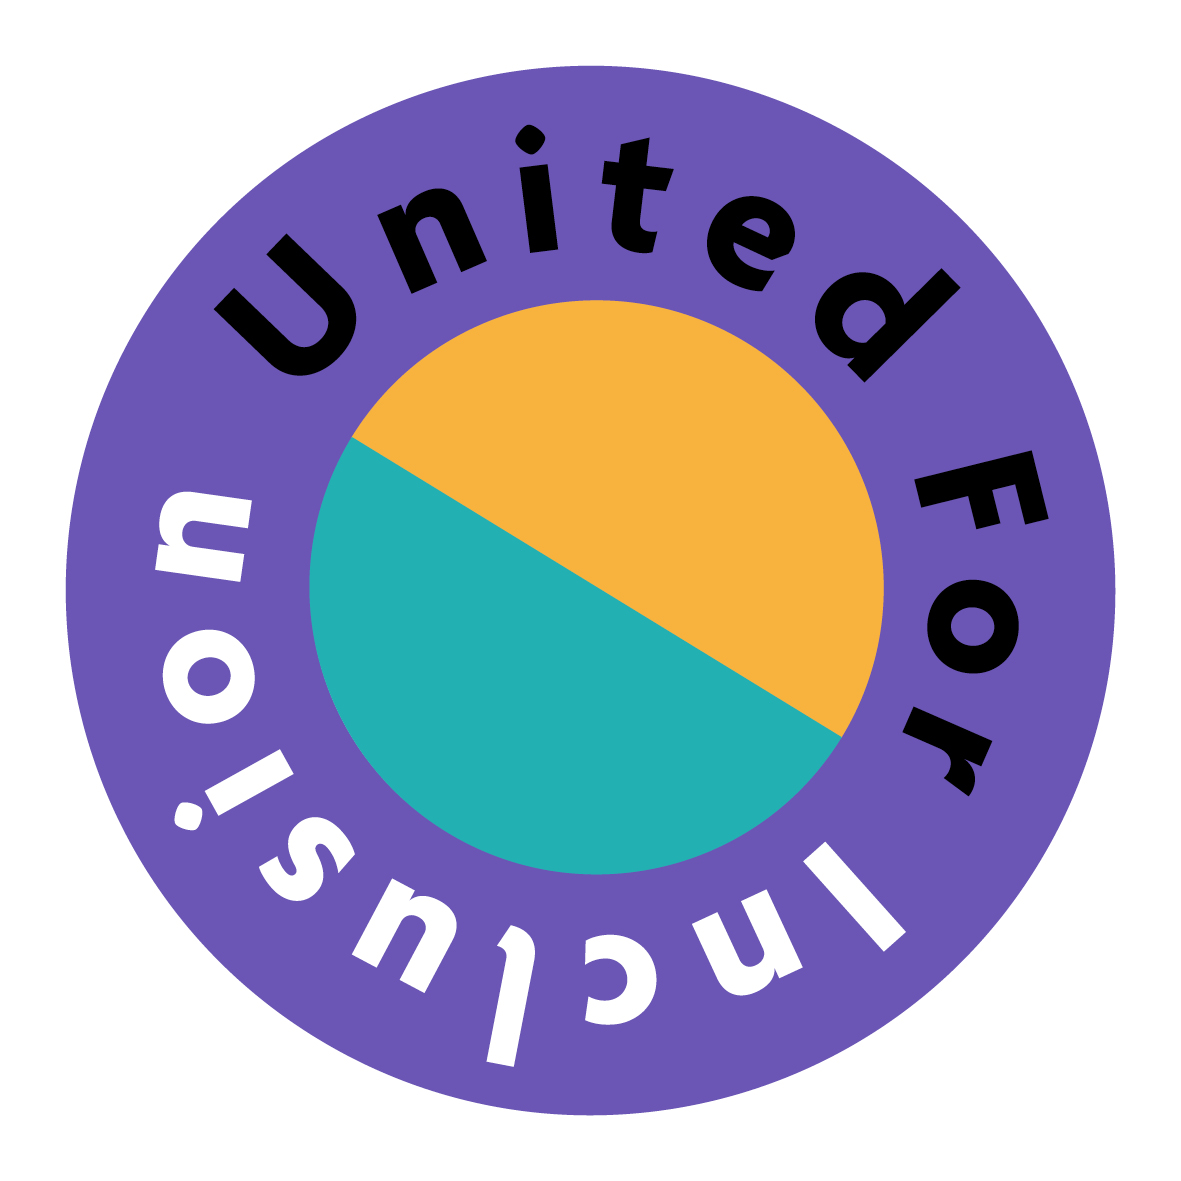 United For Inclusion written in a circular purple logo